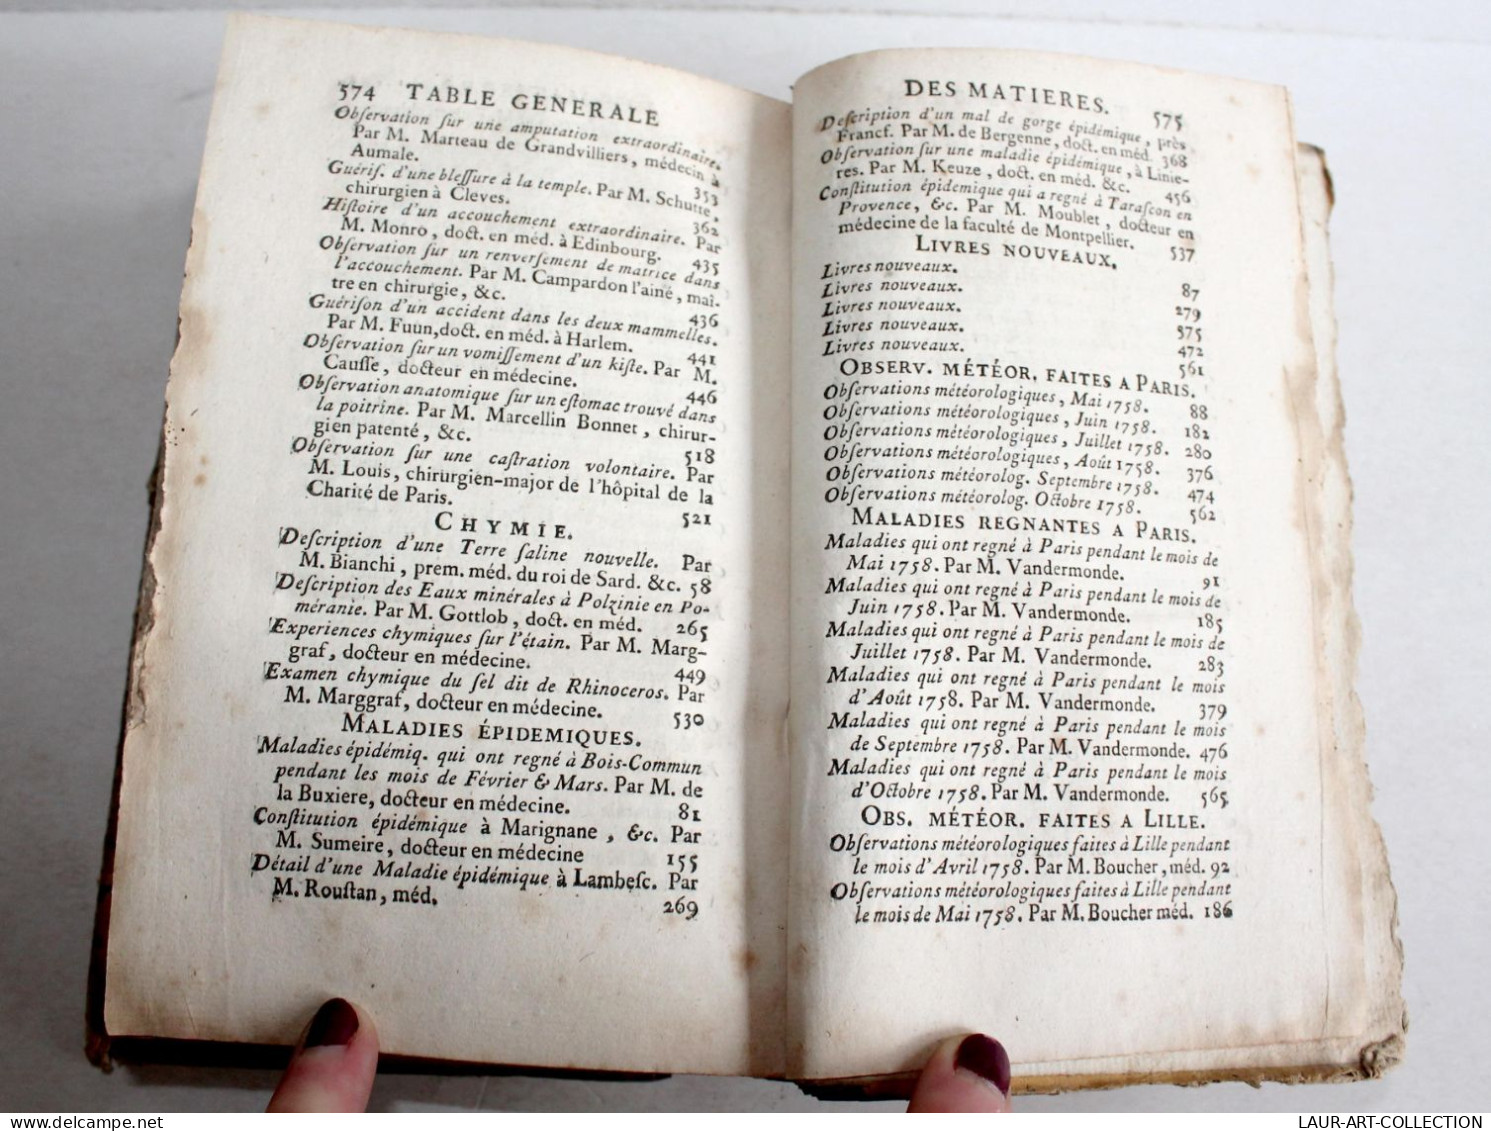 JOURNAL DE MEDECINE CHIRURGIE PHARMACIE par VANDERMONDE JUIL. A DEC 1758 TOME IX / ANCIEN LIVRE XVIIIe SIECLE (2603.90)